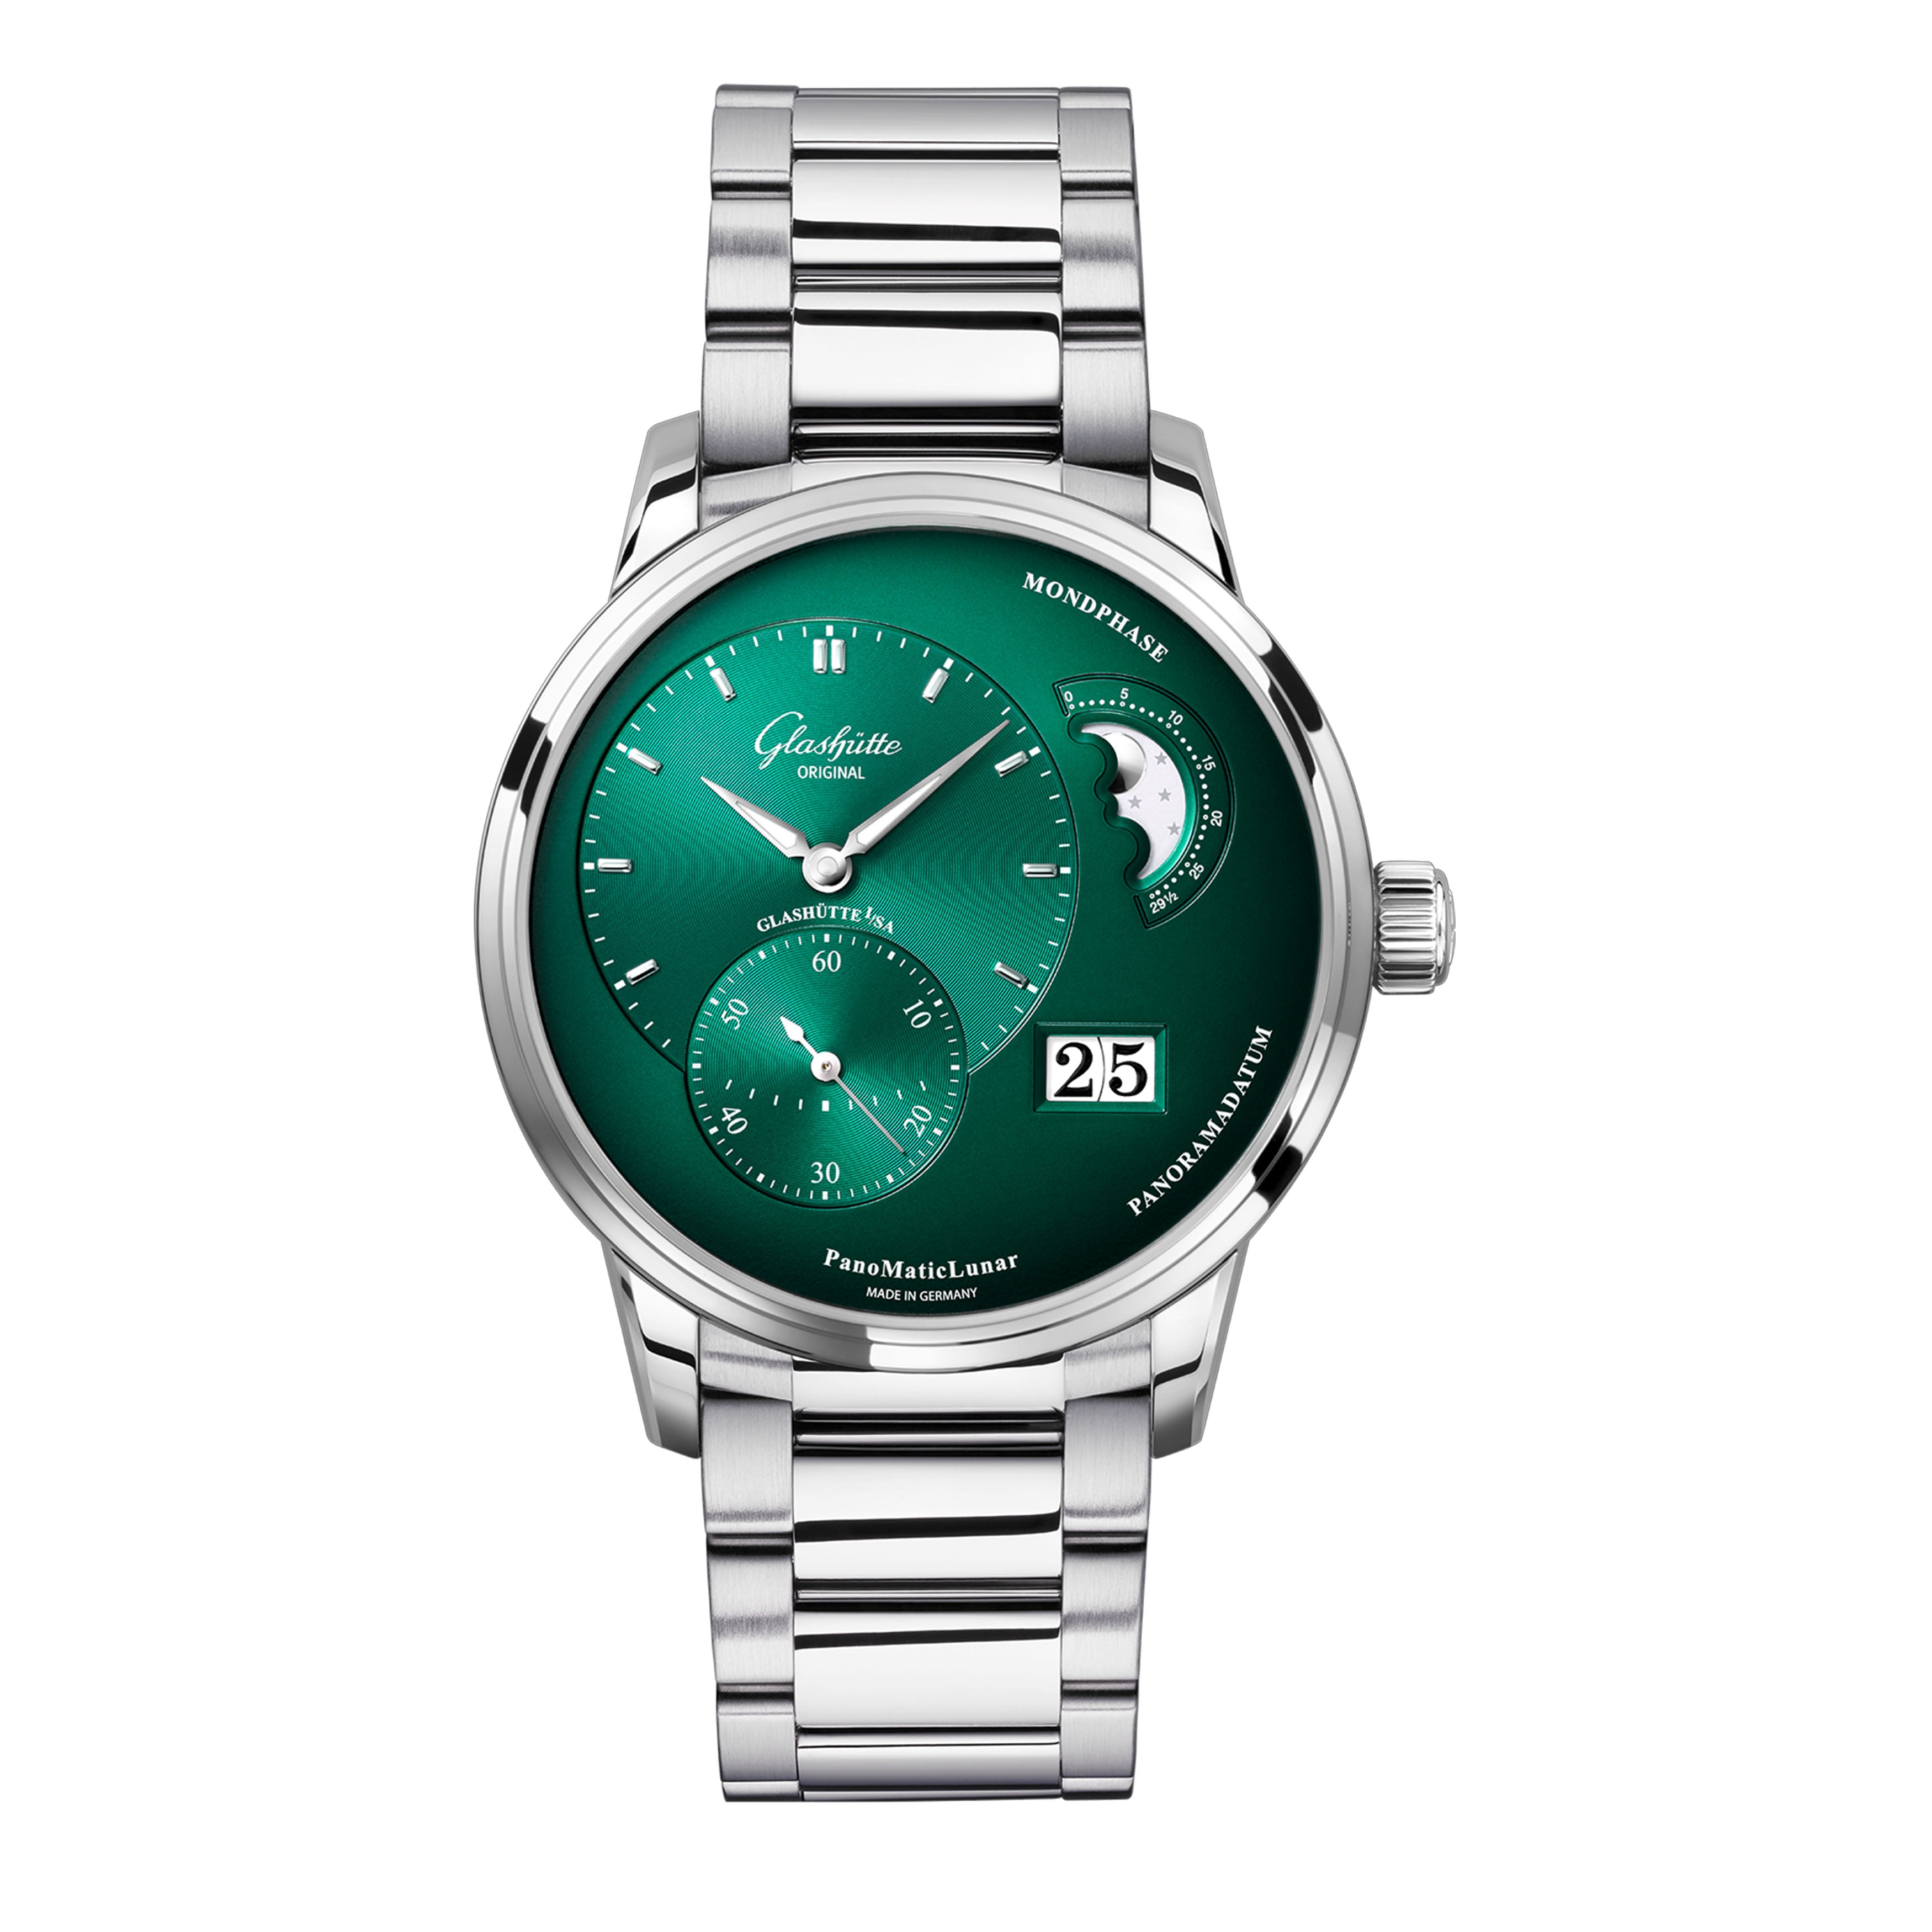 Glashutte Original PanoMaticLunar Watch, 40mm Green Dial, 1-90-02-13-32-70